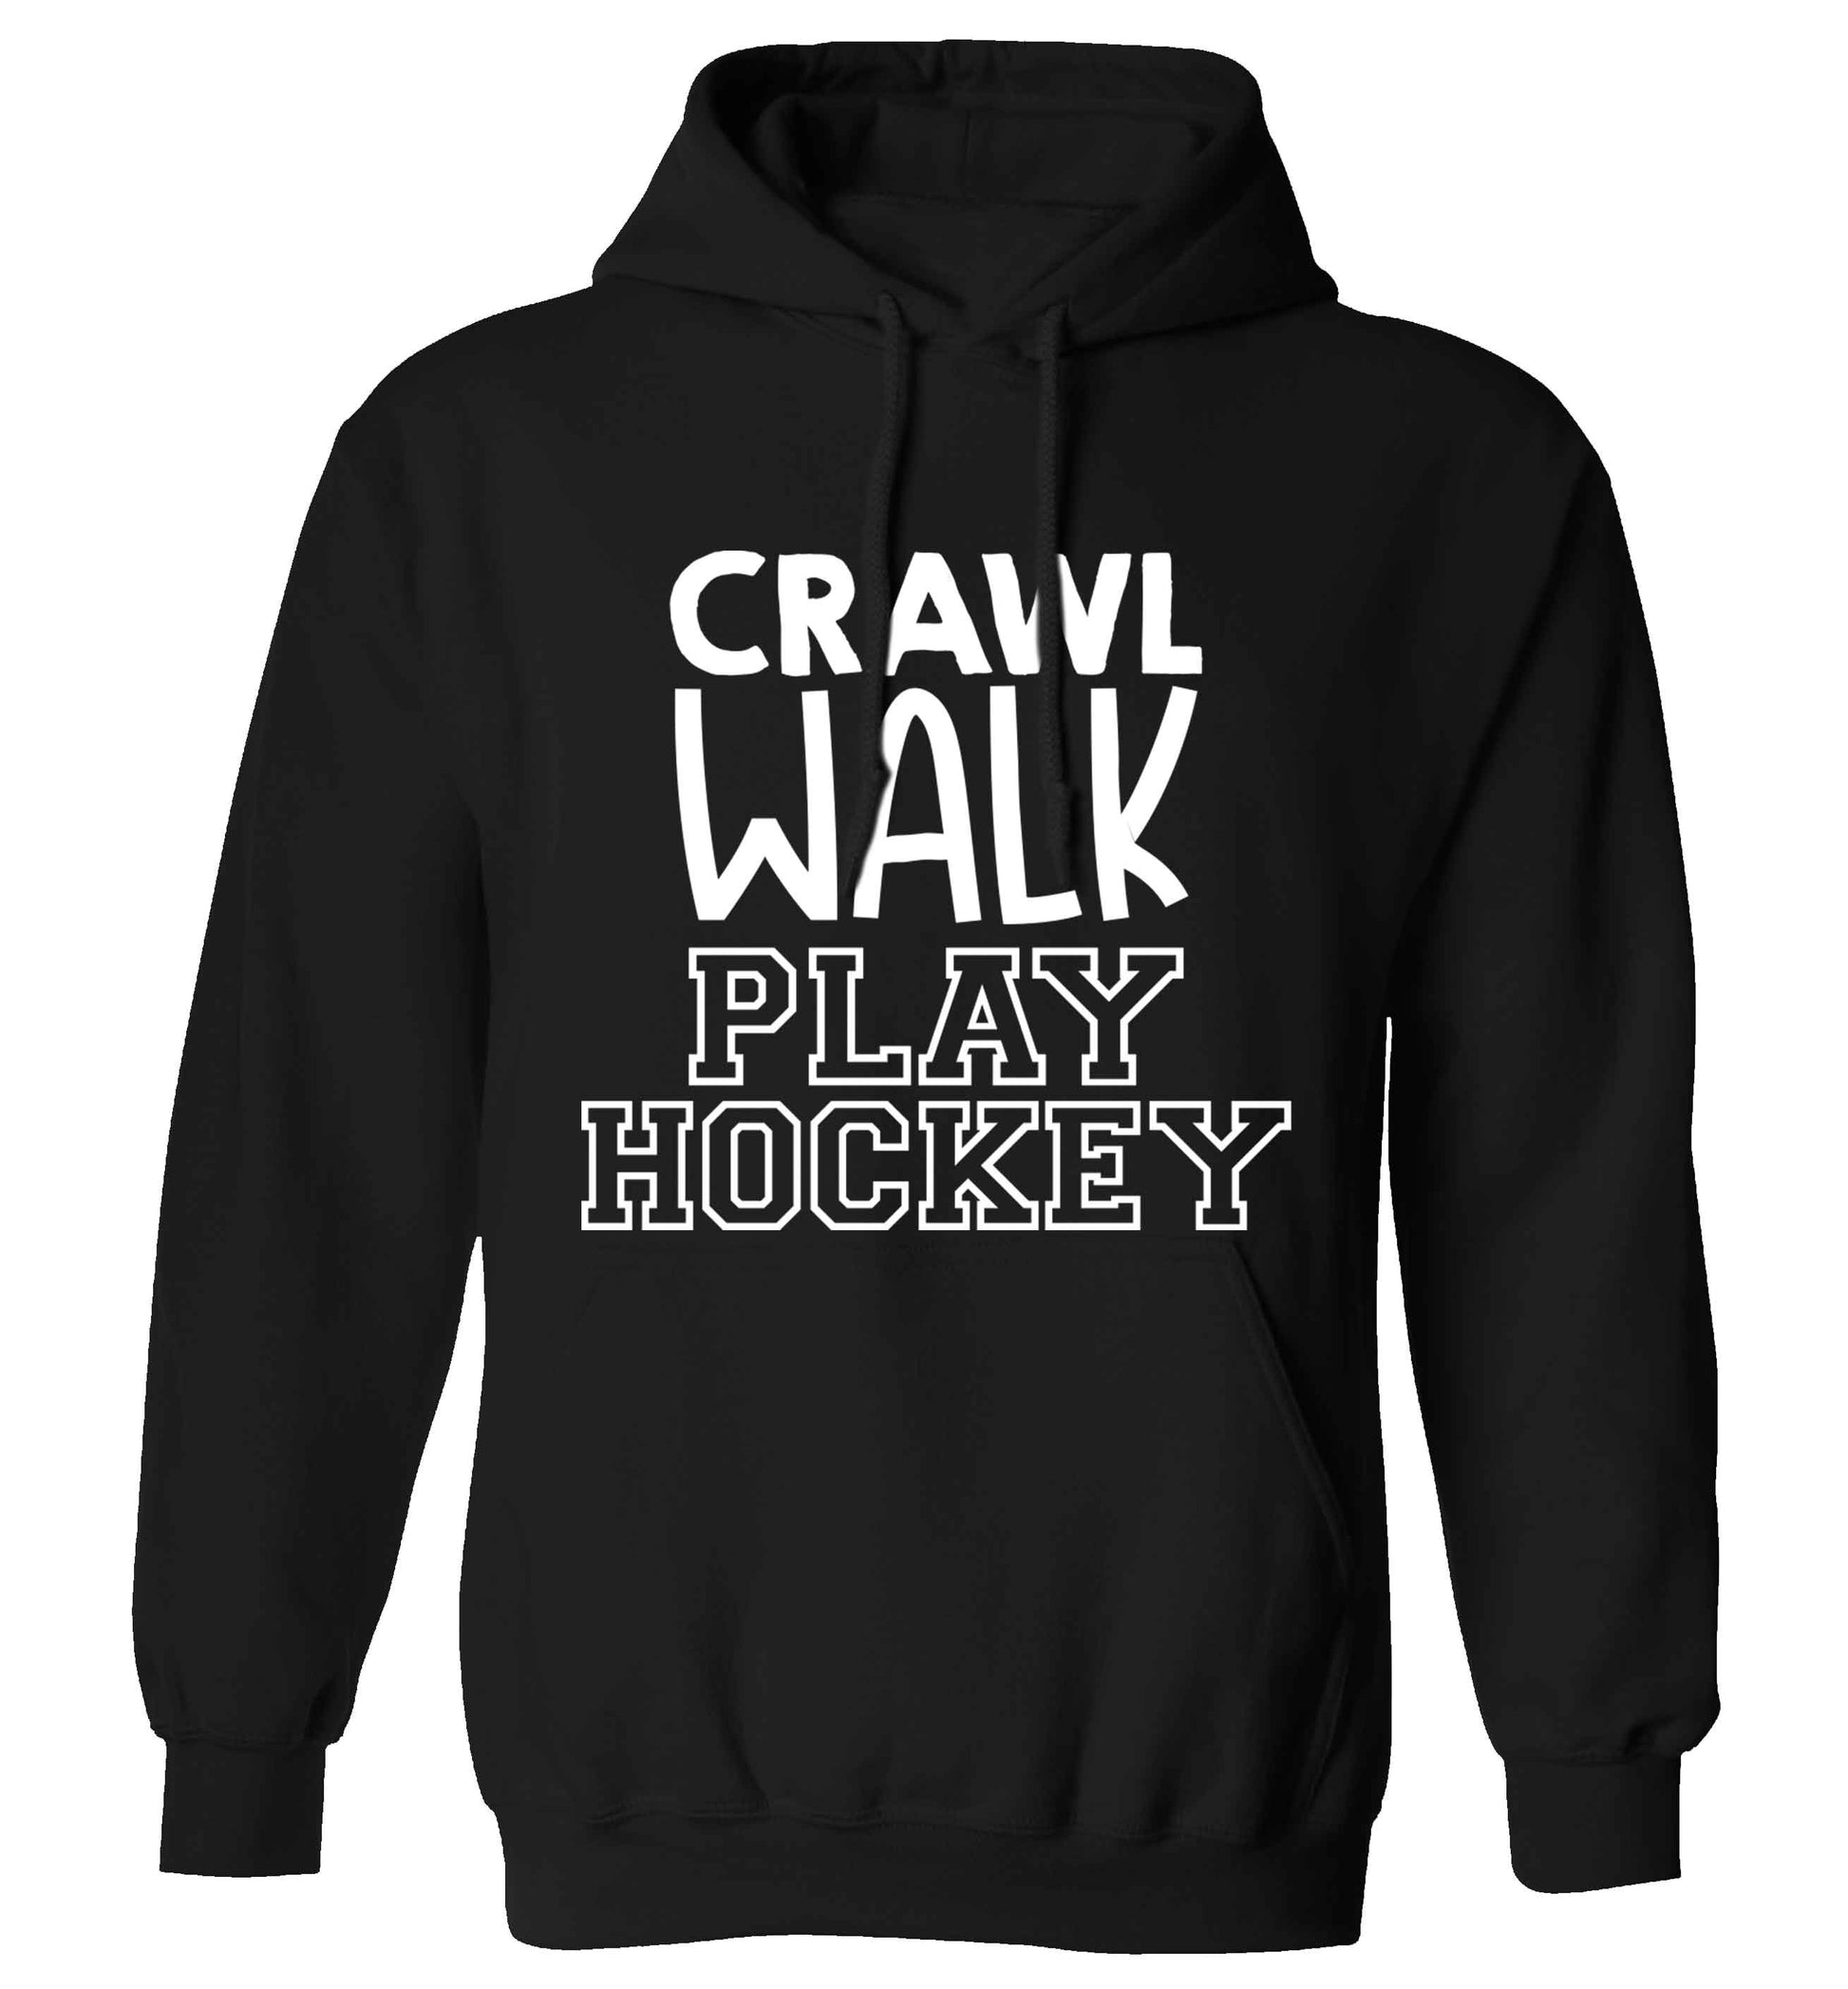 Crawl walk play hockey adults unisex black hoodie 2XL